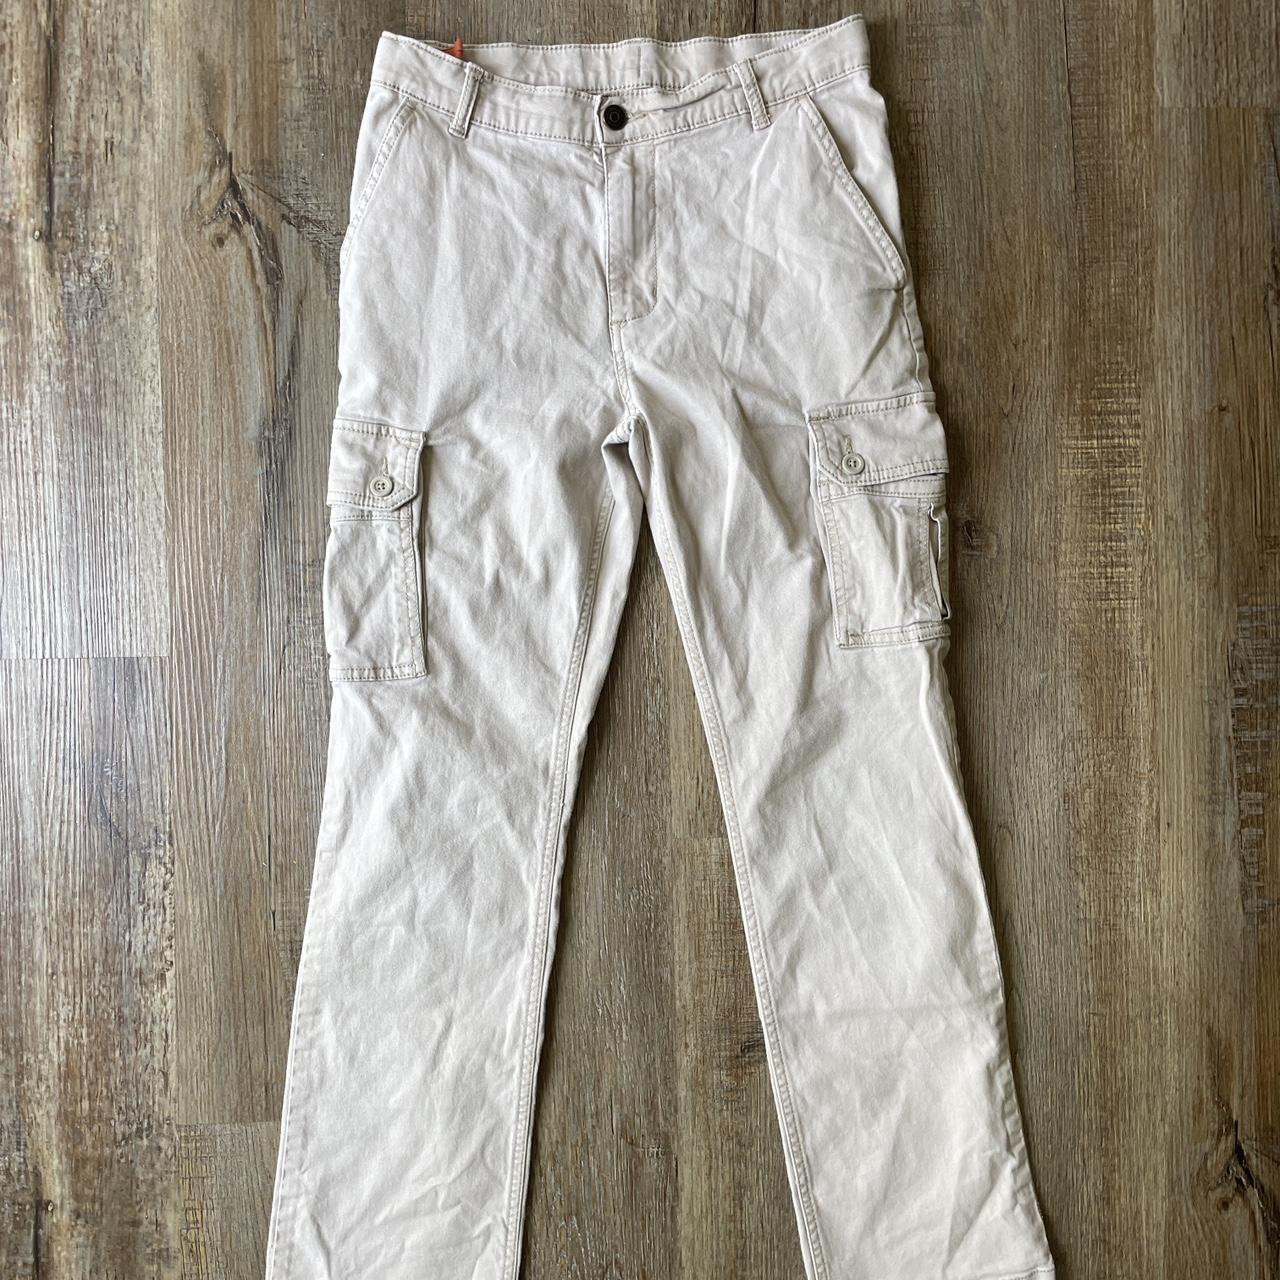 Wrangler khaki cargo pants. Classic and go with... - Depop